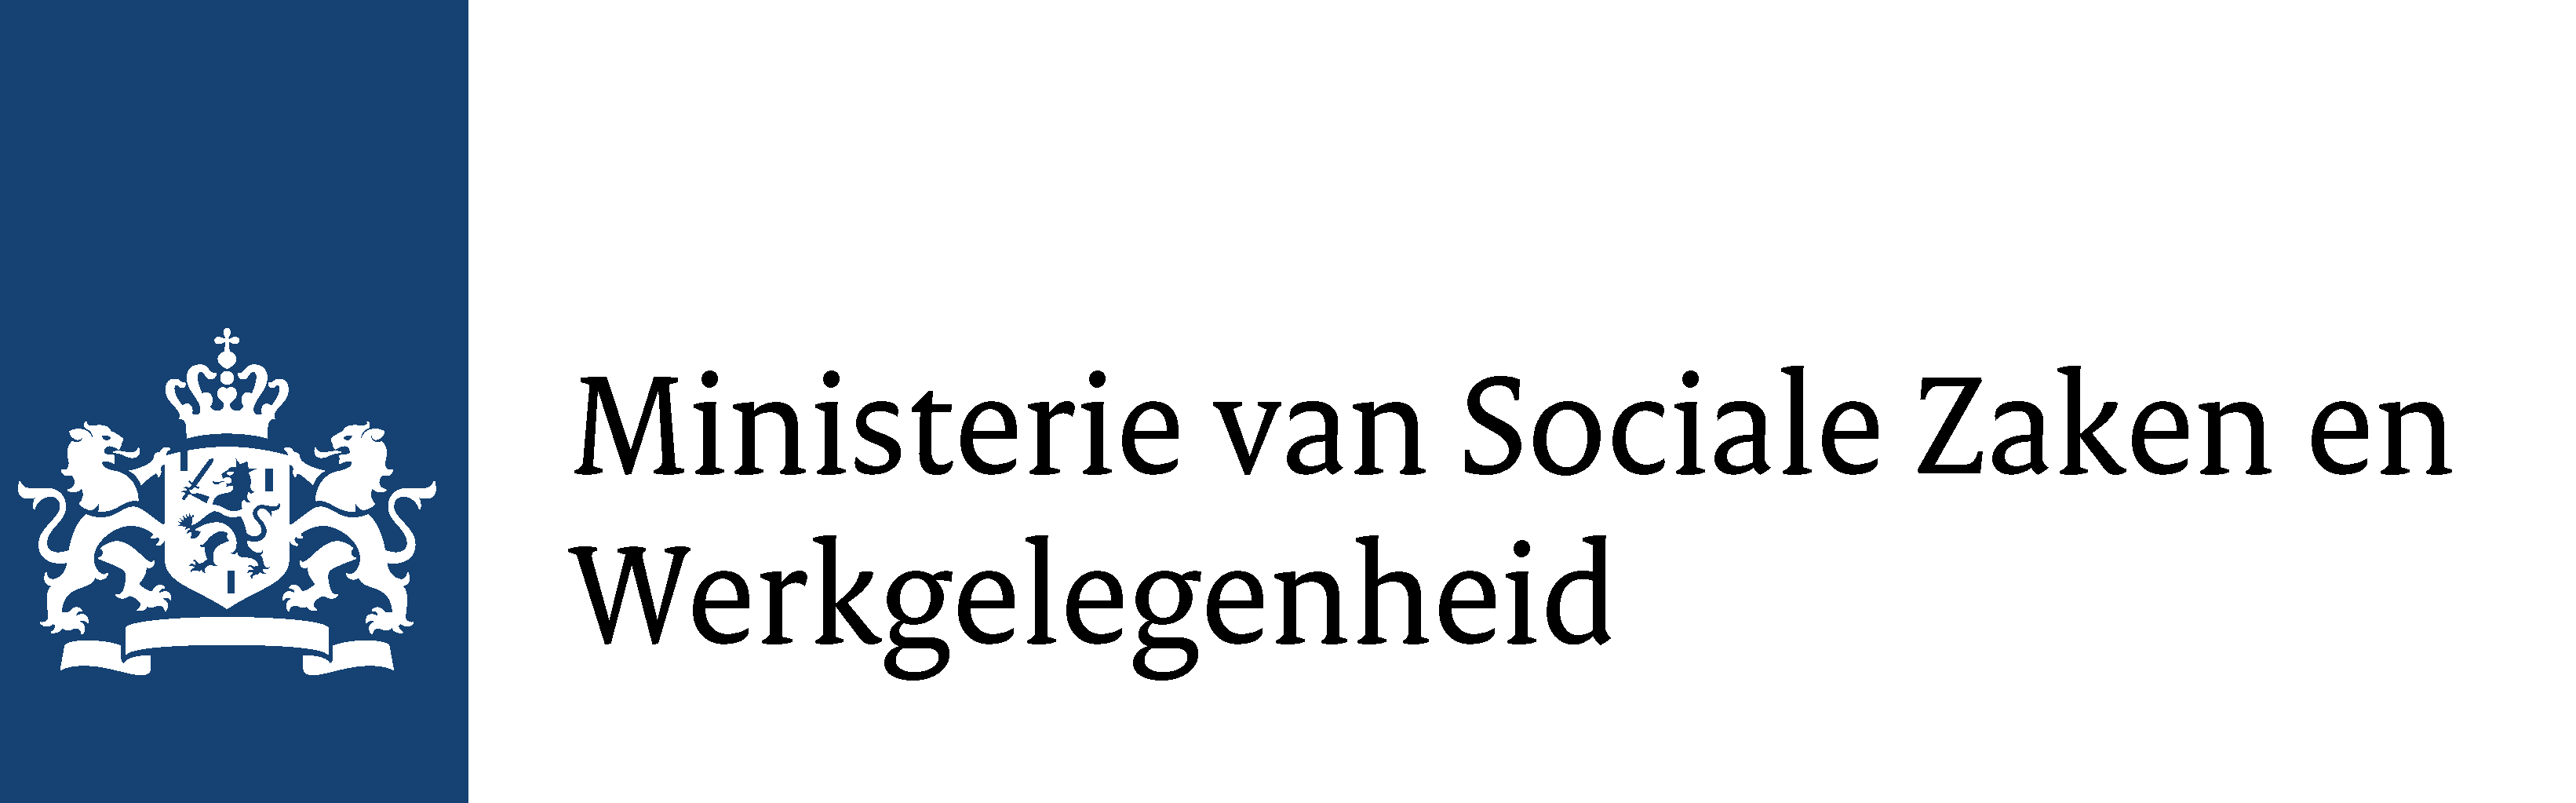 Ministerie_van_Sociale_Zaken_en_Werkgelegenheid_Logo